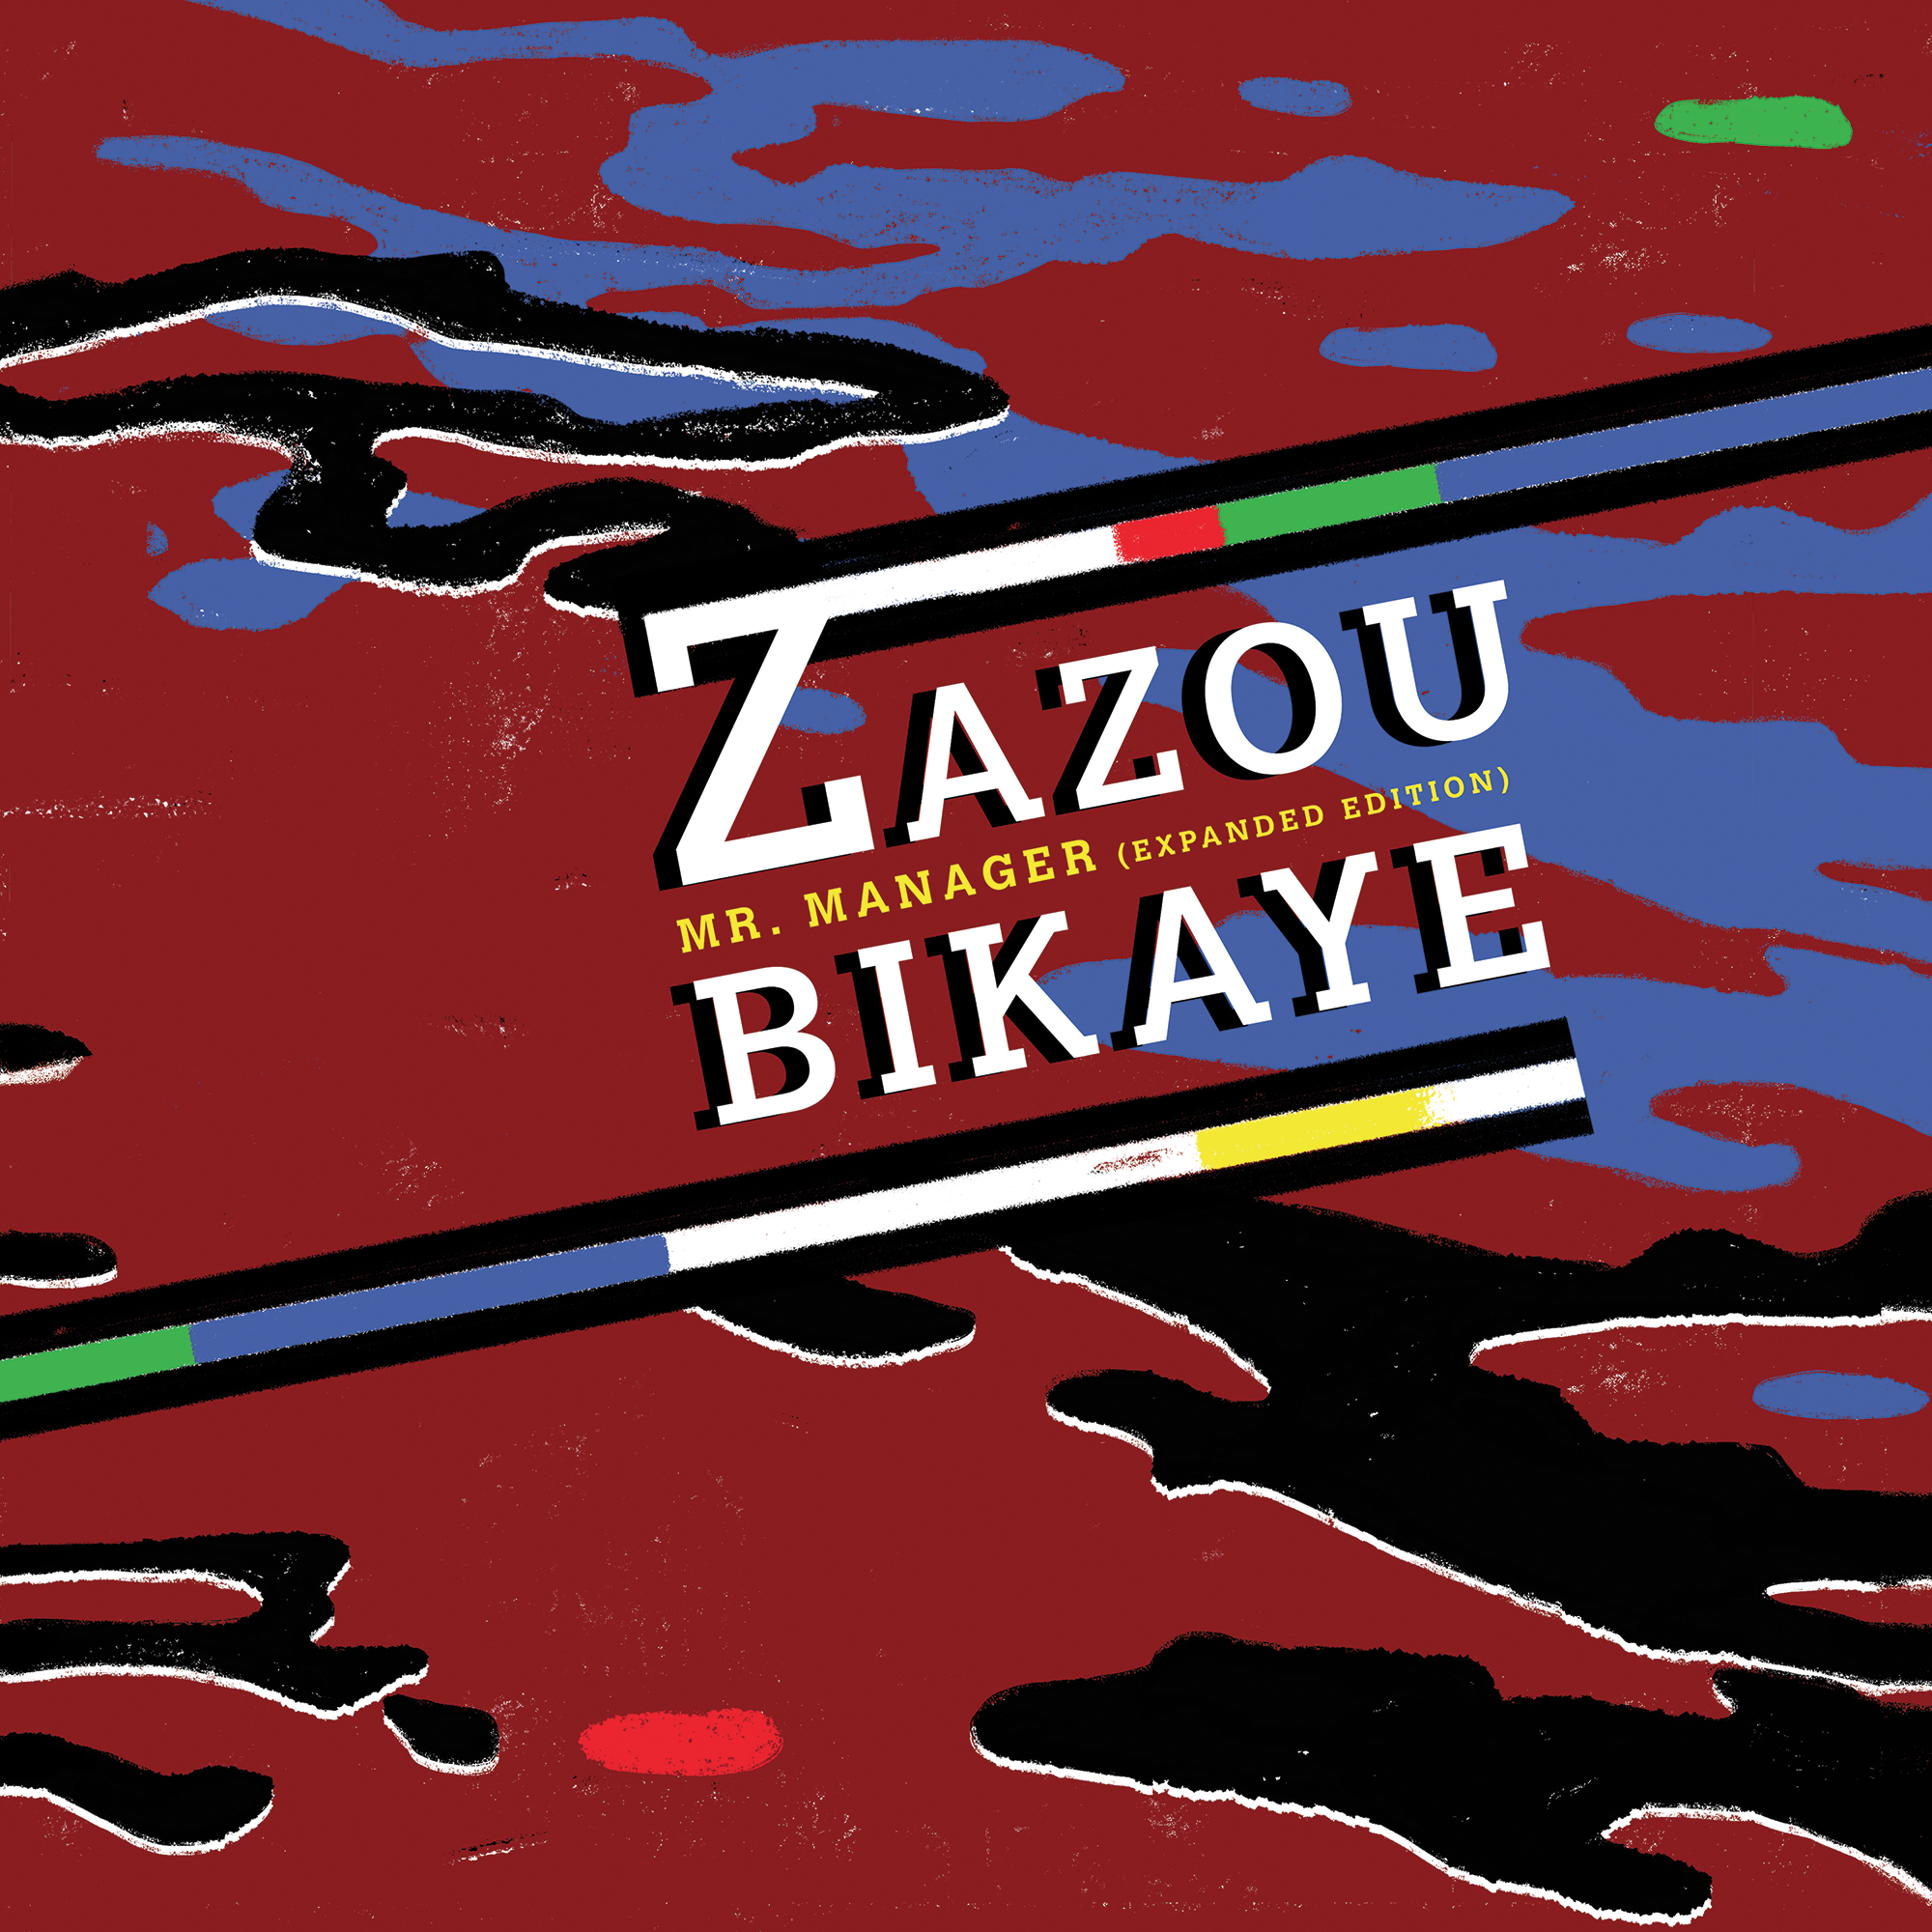 ZAZOU BIKAYE - Mr. Manager (Expanded Edition)